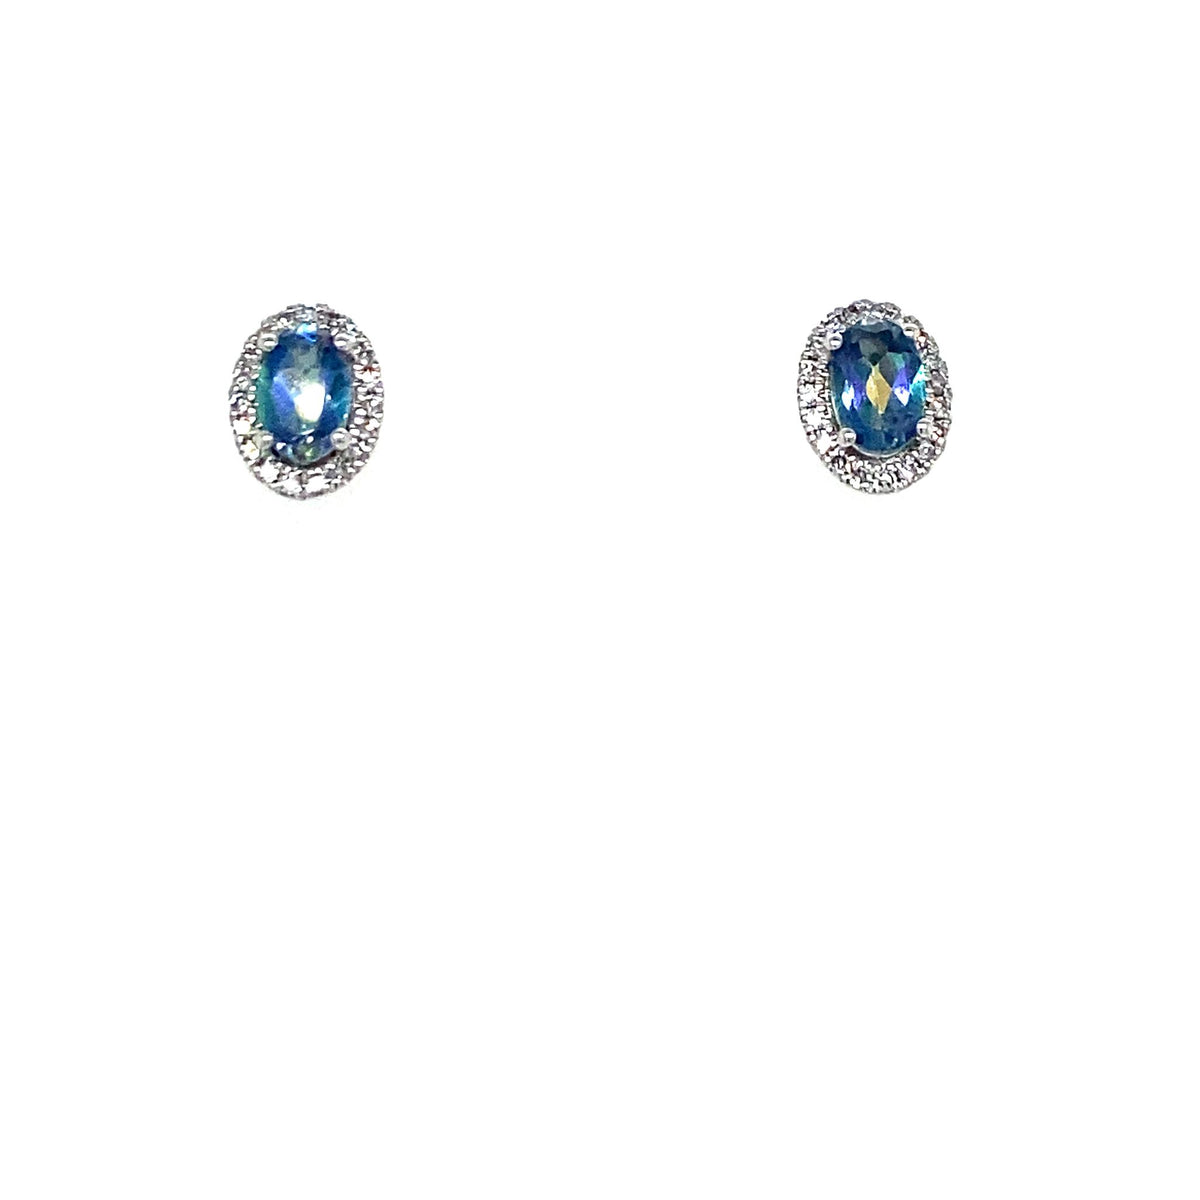 10Kt White Gold Halo Earrings Gemstone Earrings With Topazes